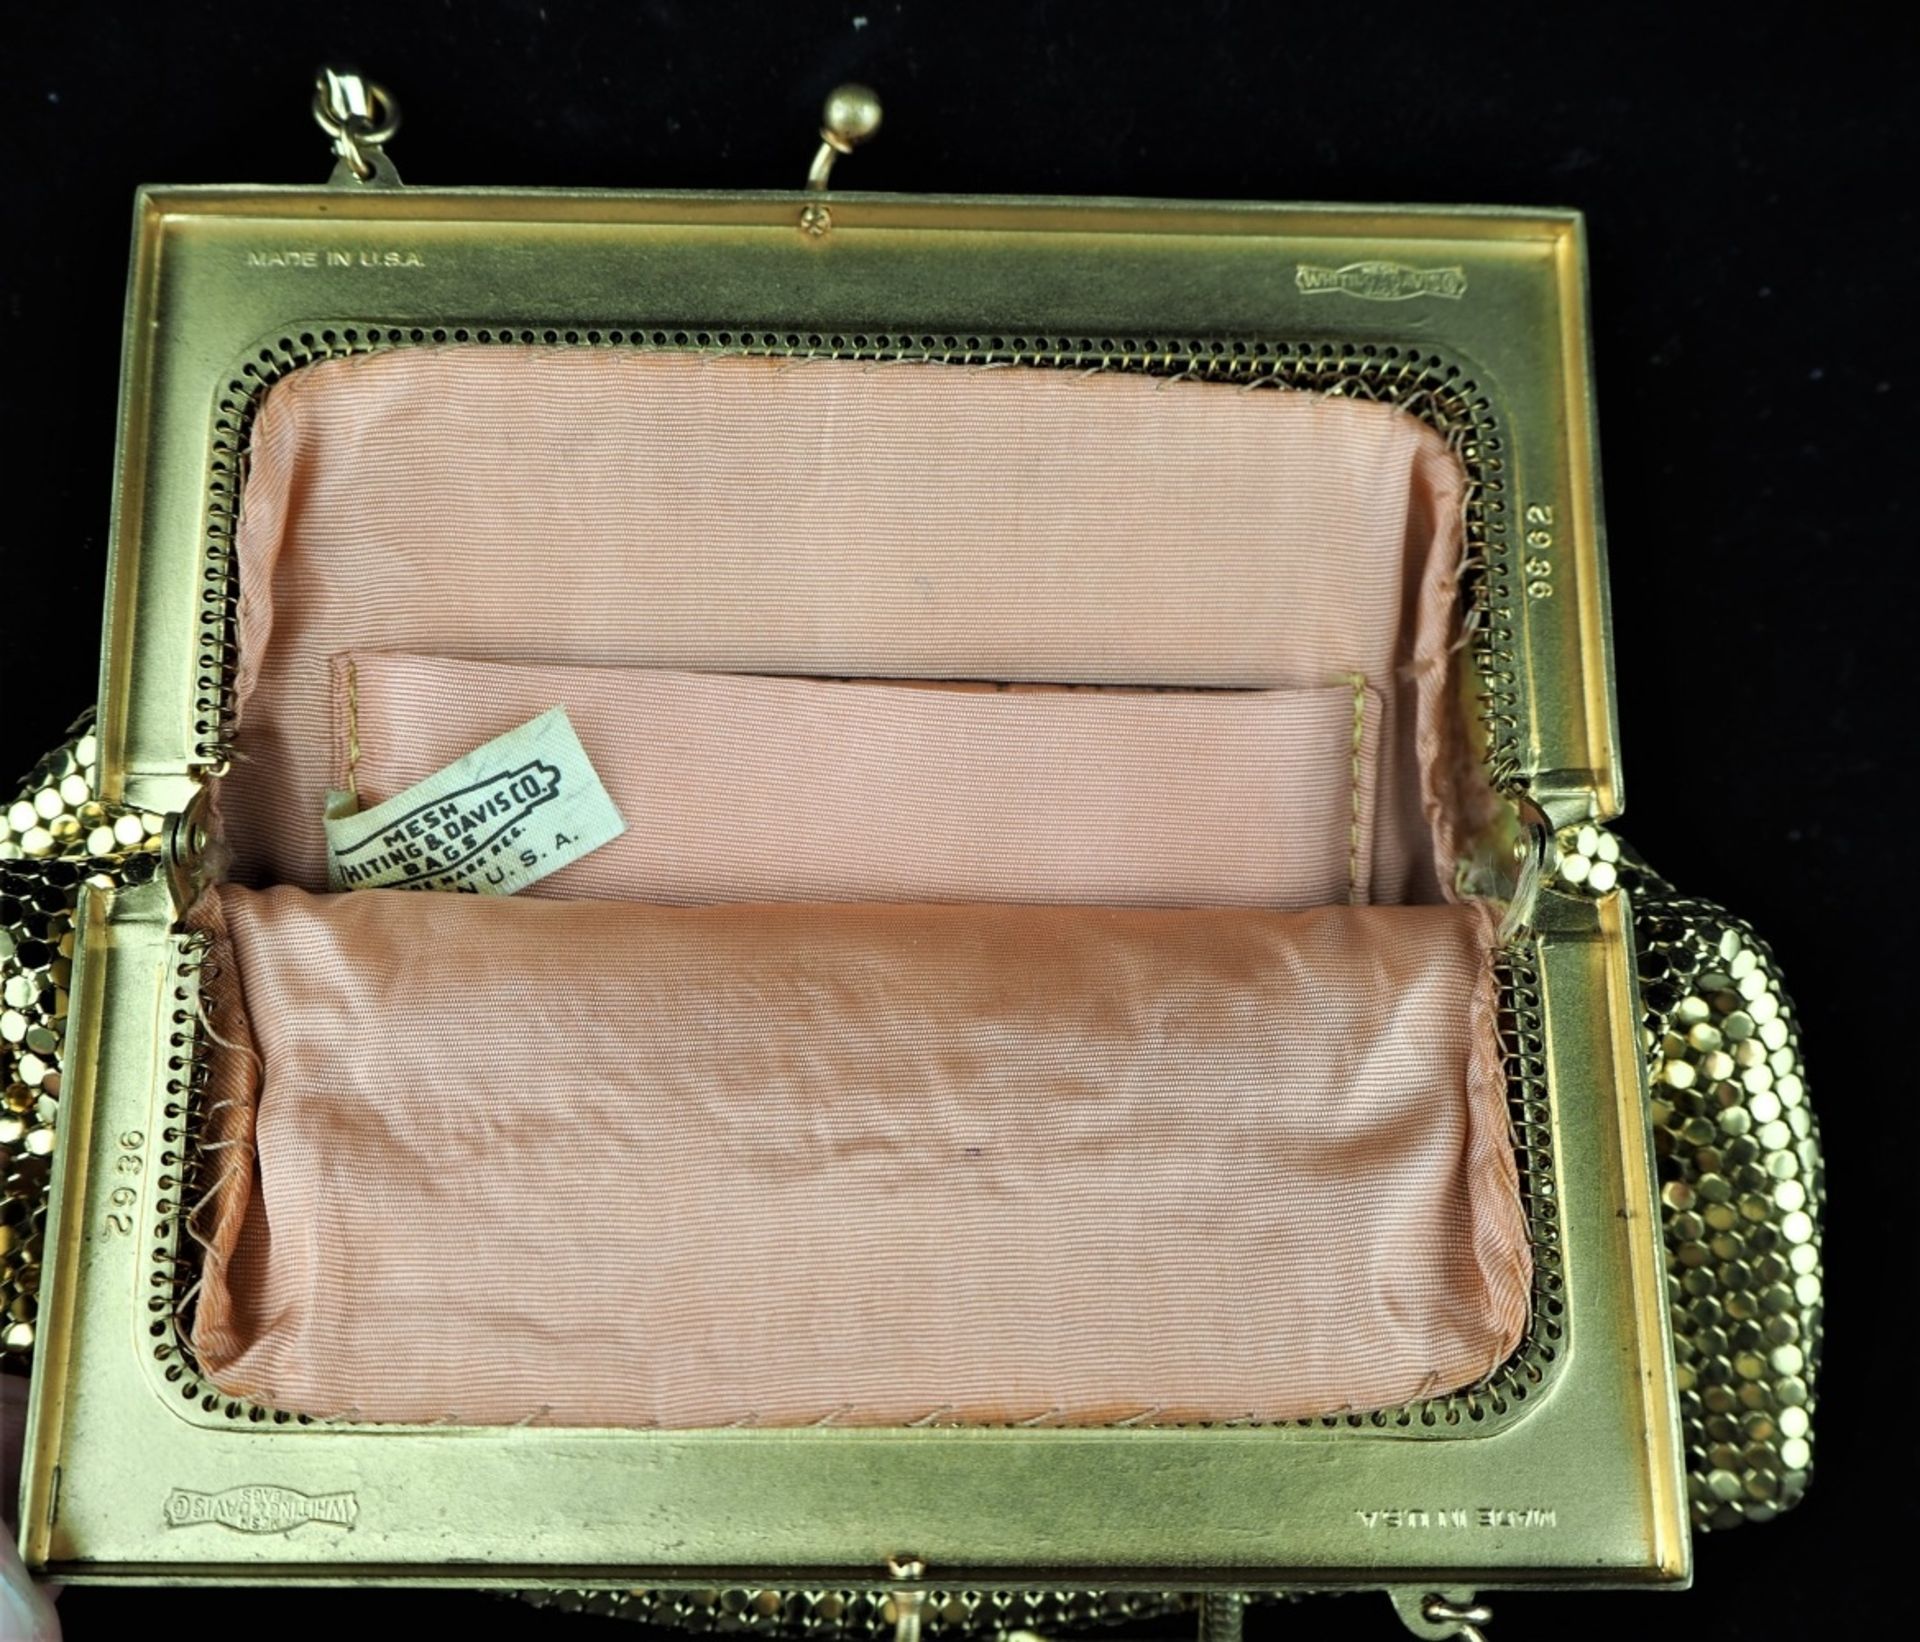 Goldfarbene kleine Handtasche Marke "Mesh Whiting &amp; Davis Bags", USA, goldfarben, Ra - Image 3 of 3